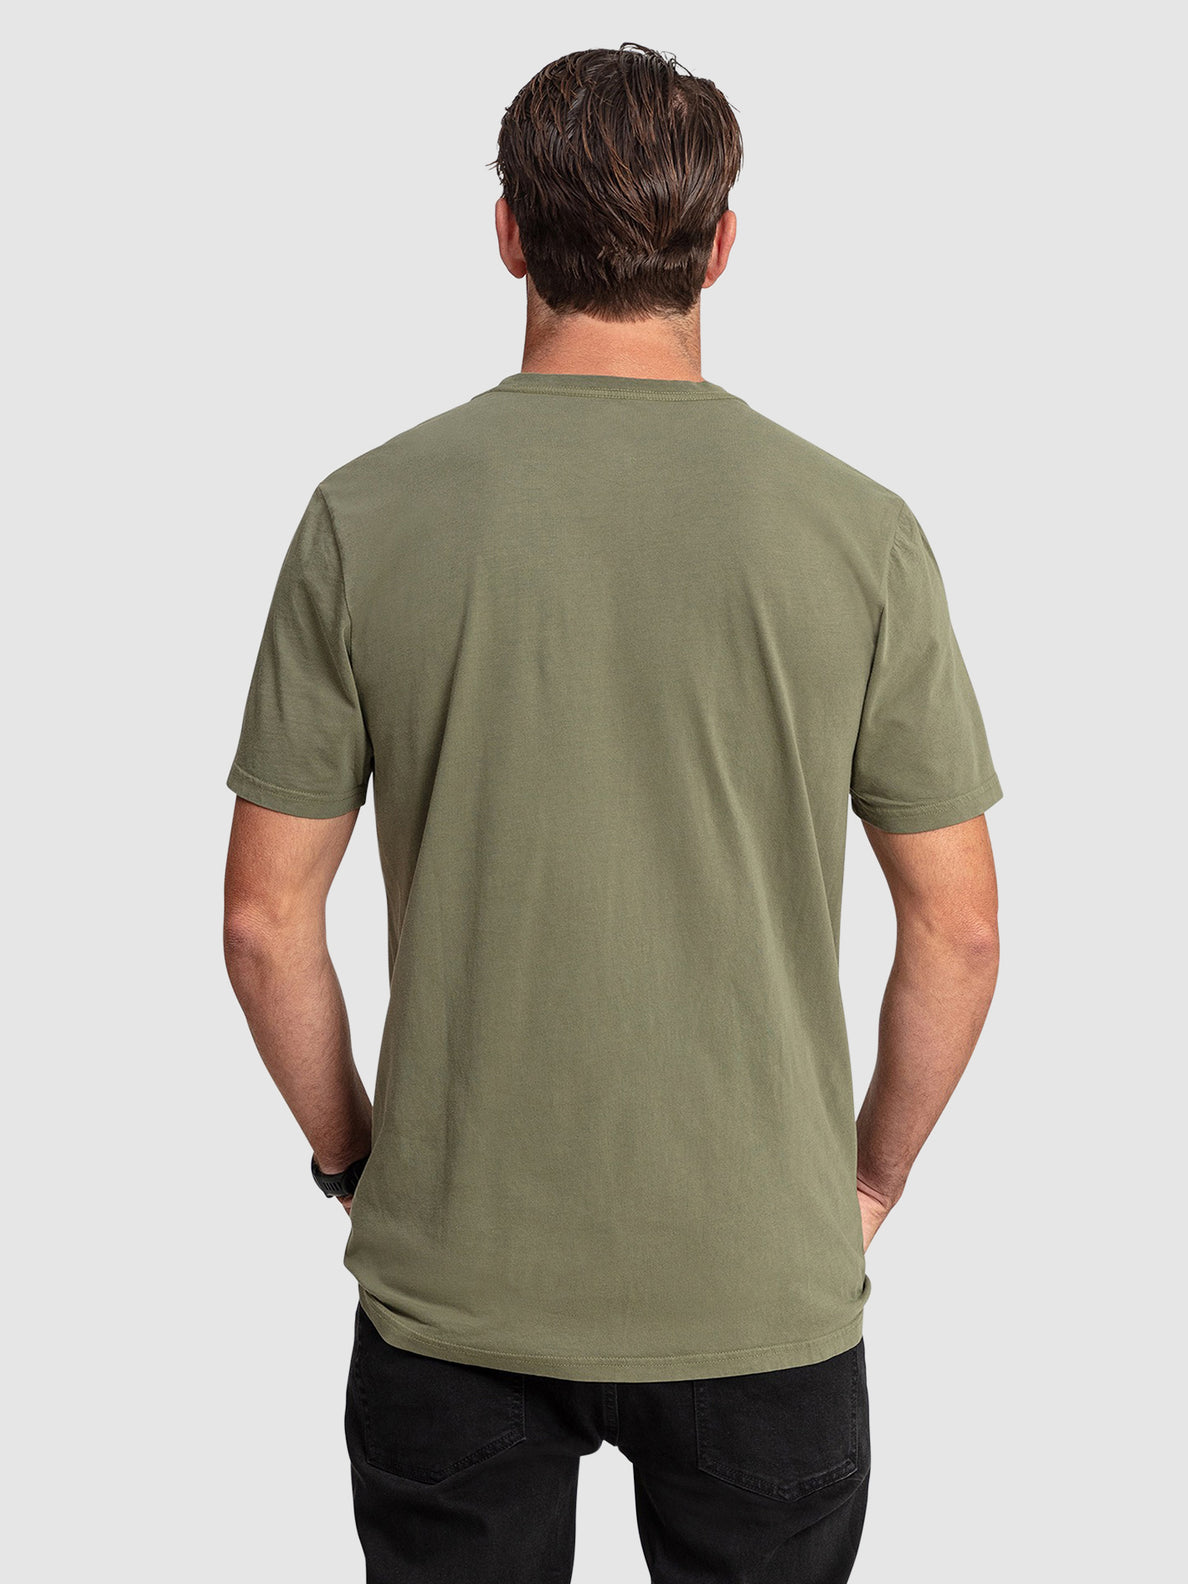 Aus Wash Short Sleeve T-Shirt - Army Green Combo